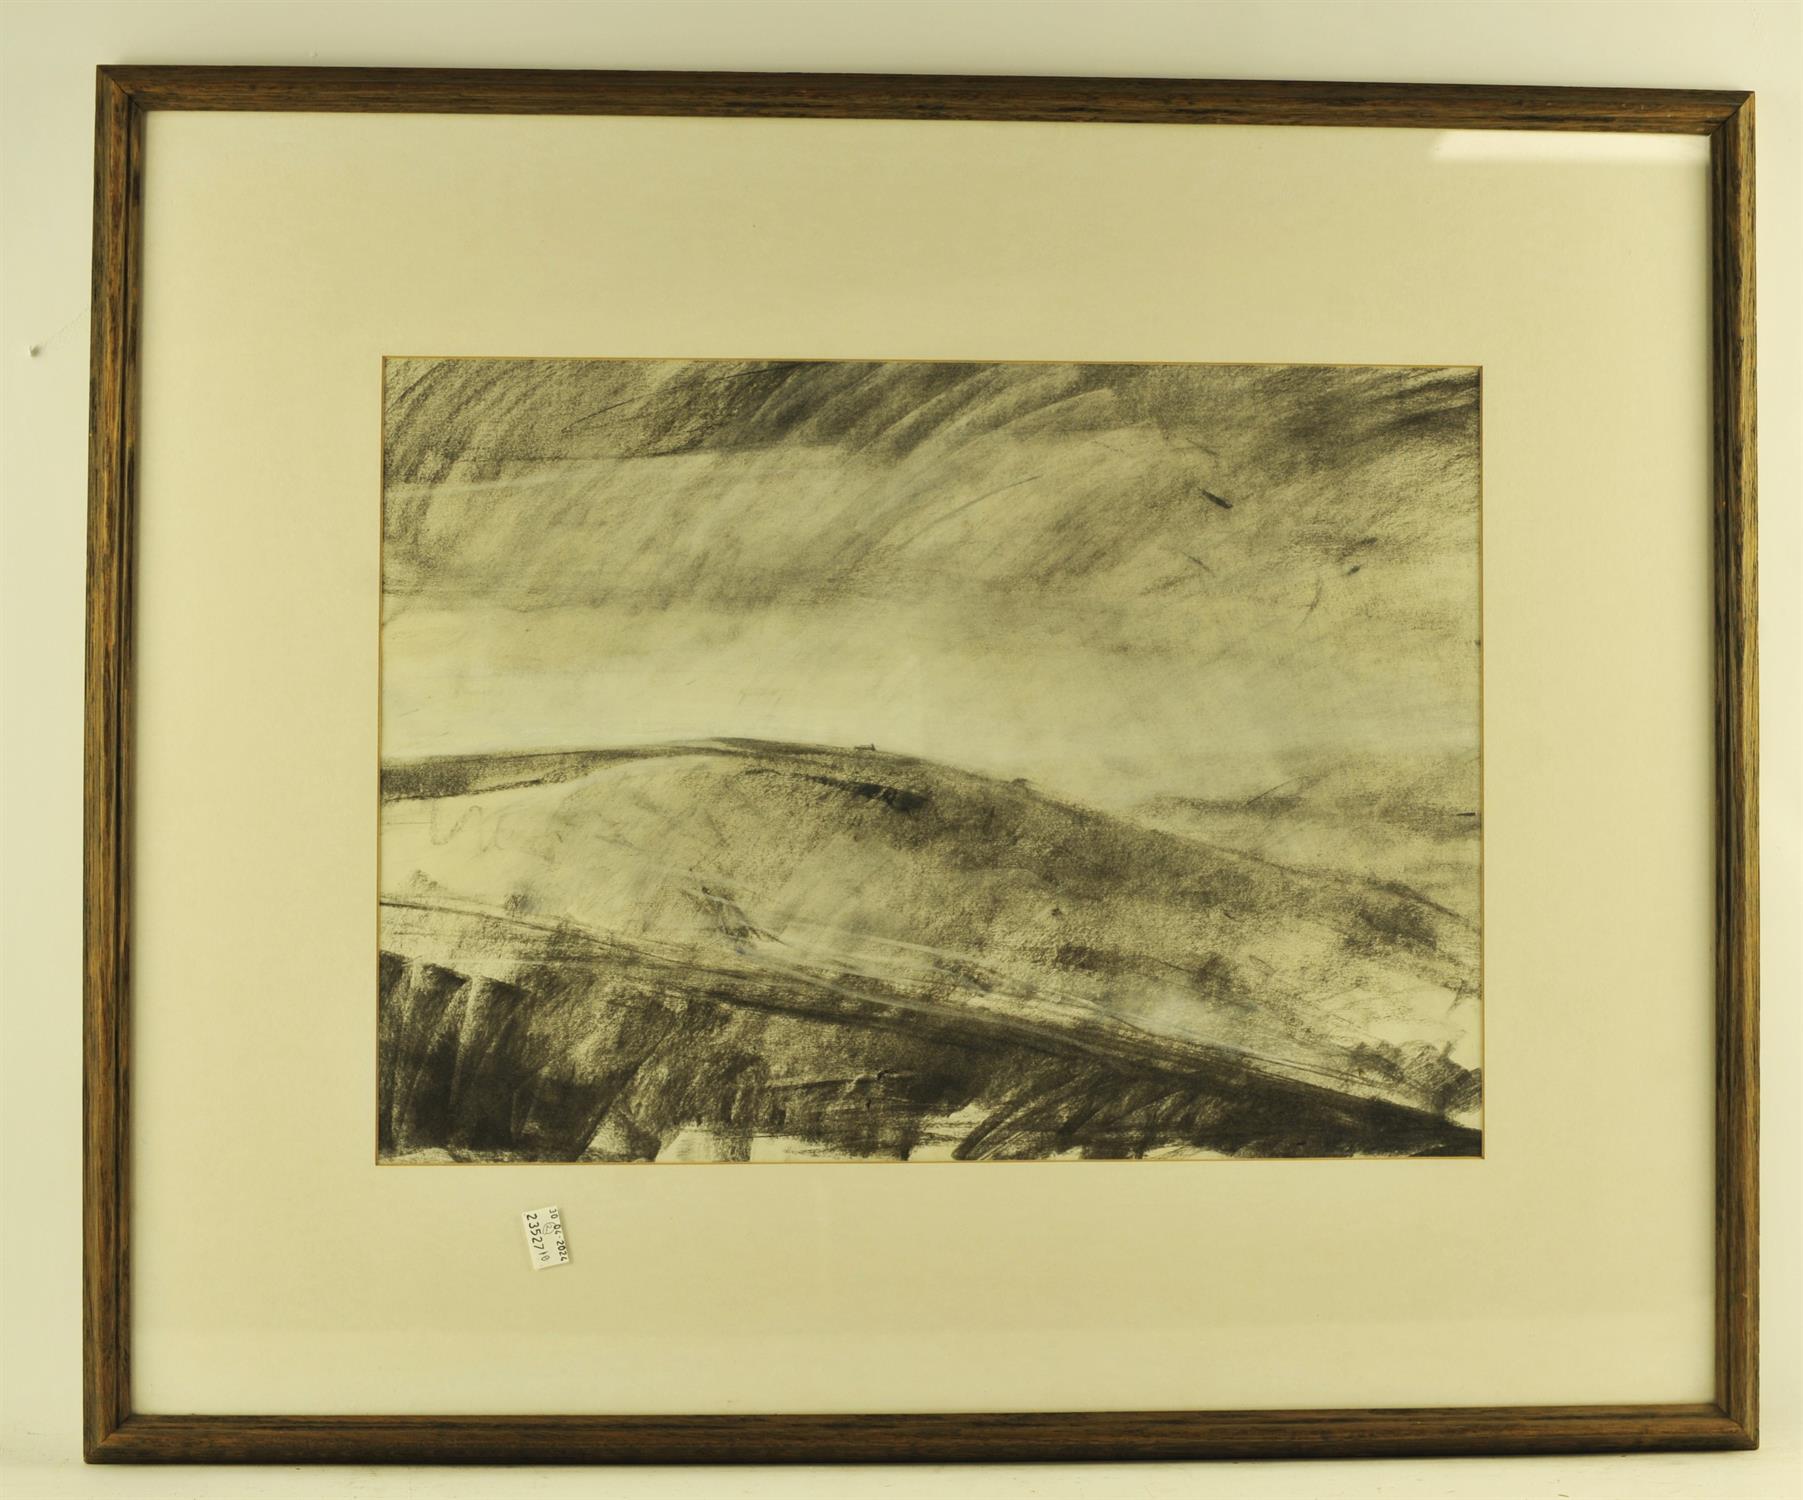 David H. Hunt (contemporary), Bleak landscape, oil on canvas laid on board, indistinctly signed - Image 2 of 2